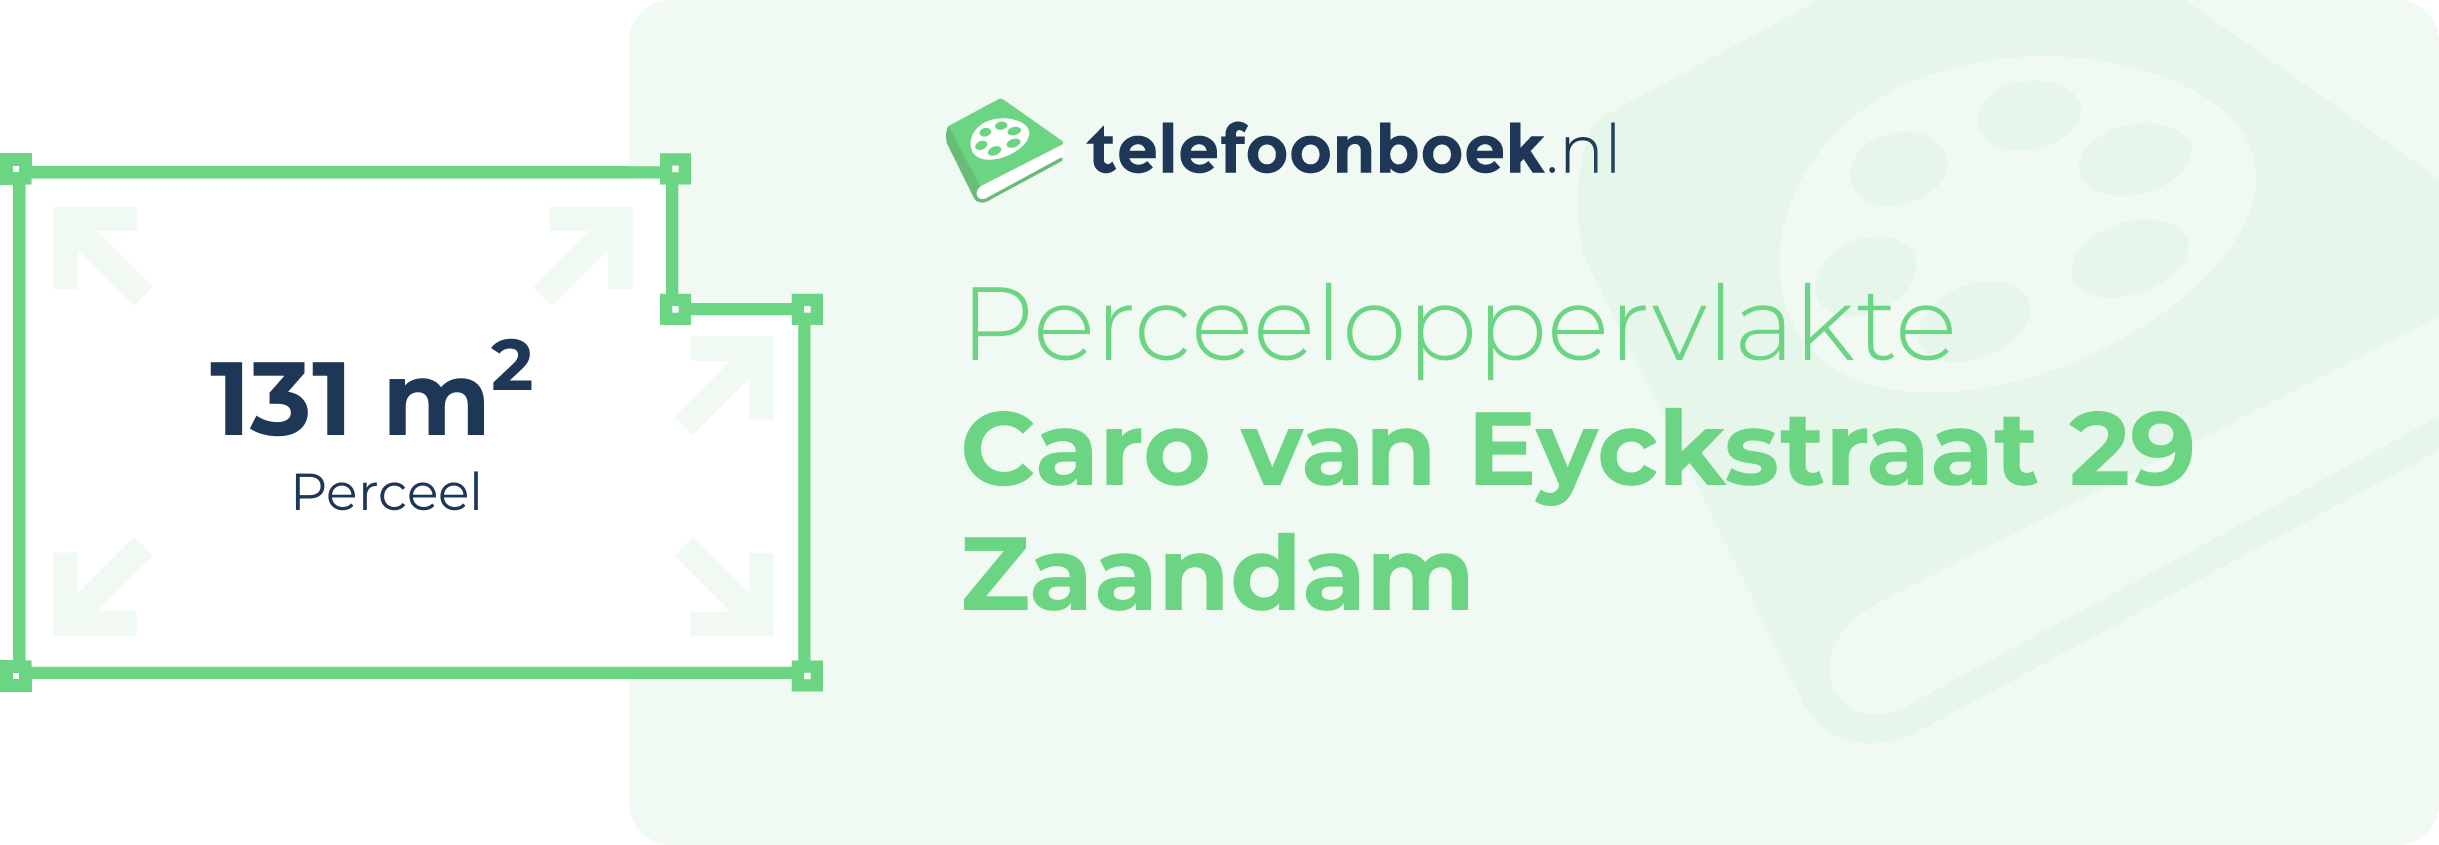 Perceeloppervlakte Caro Van Eyckstraat 29 Zaandam